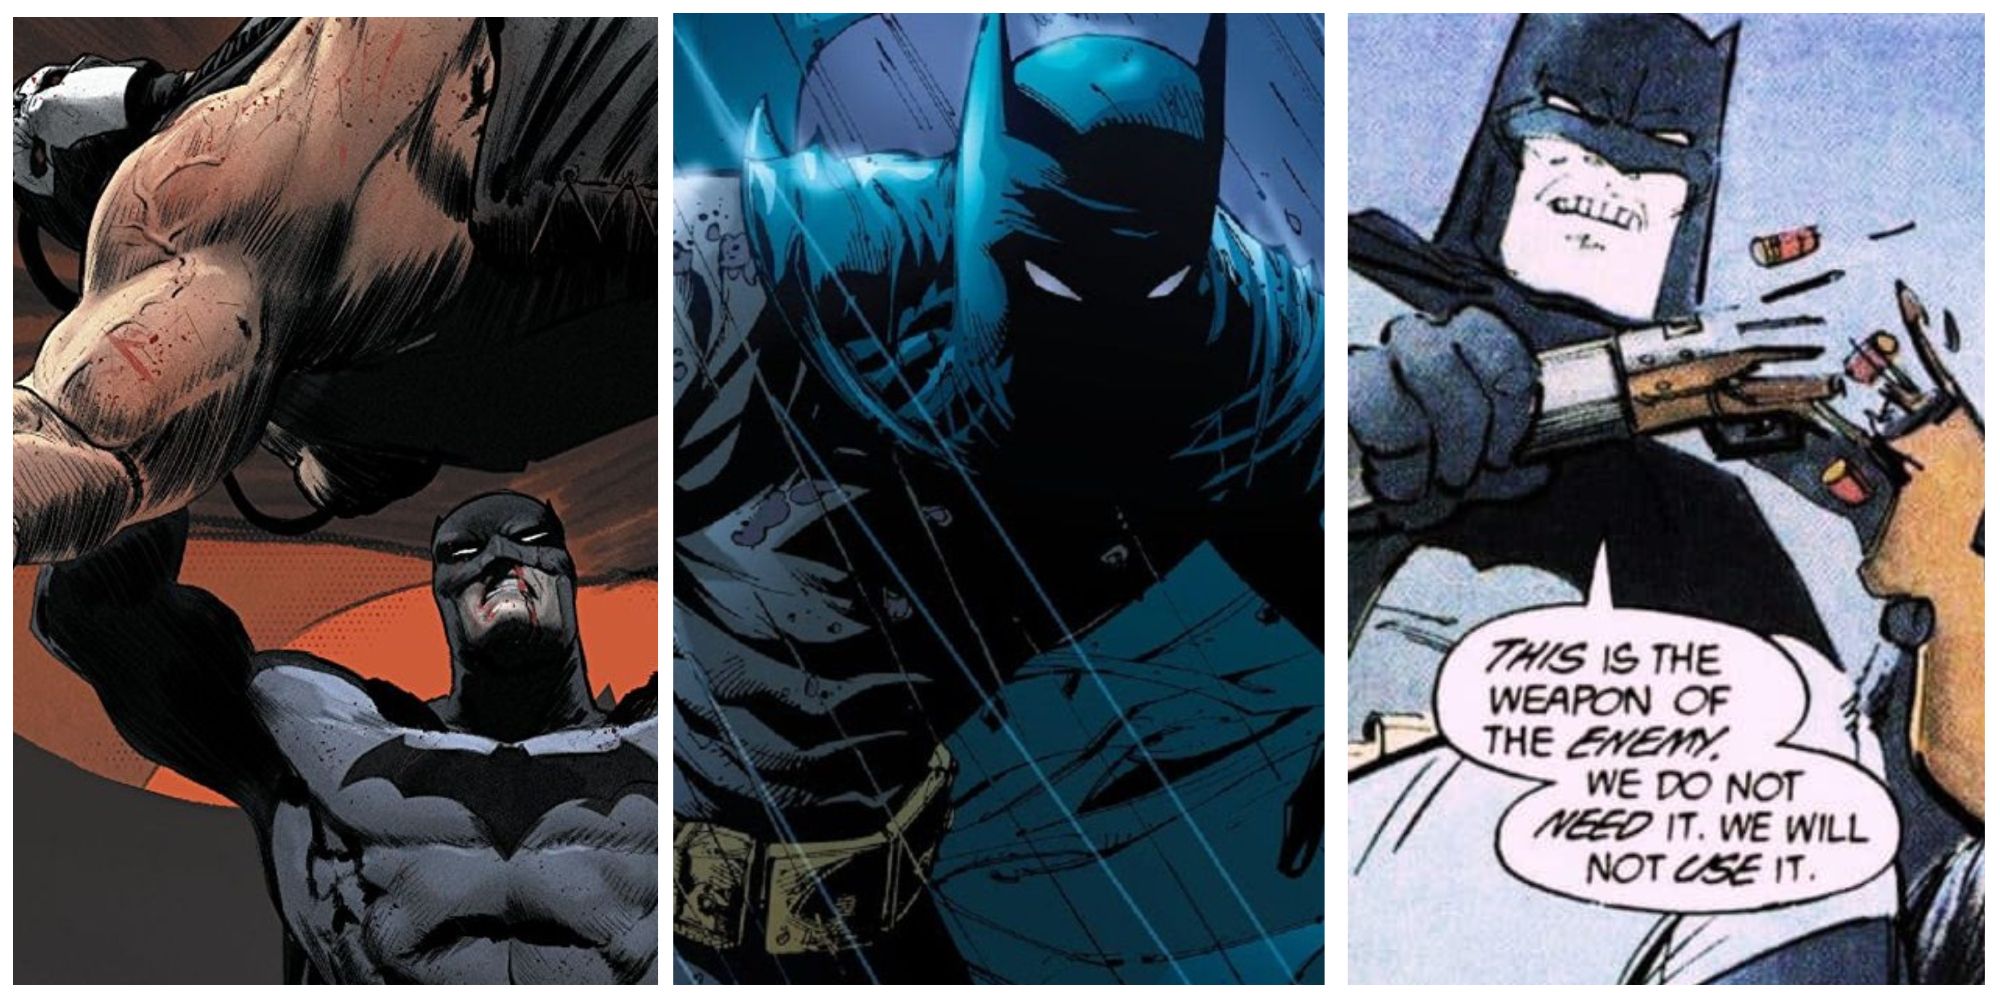 A split image of Batman and Bane, Batman silhouetted, and Batman breaking a gun in DC Comics